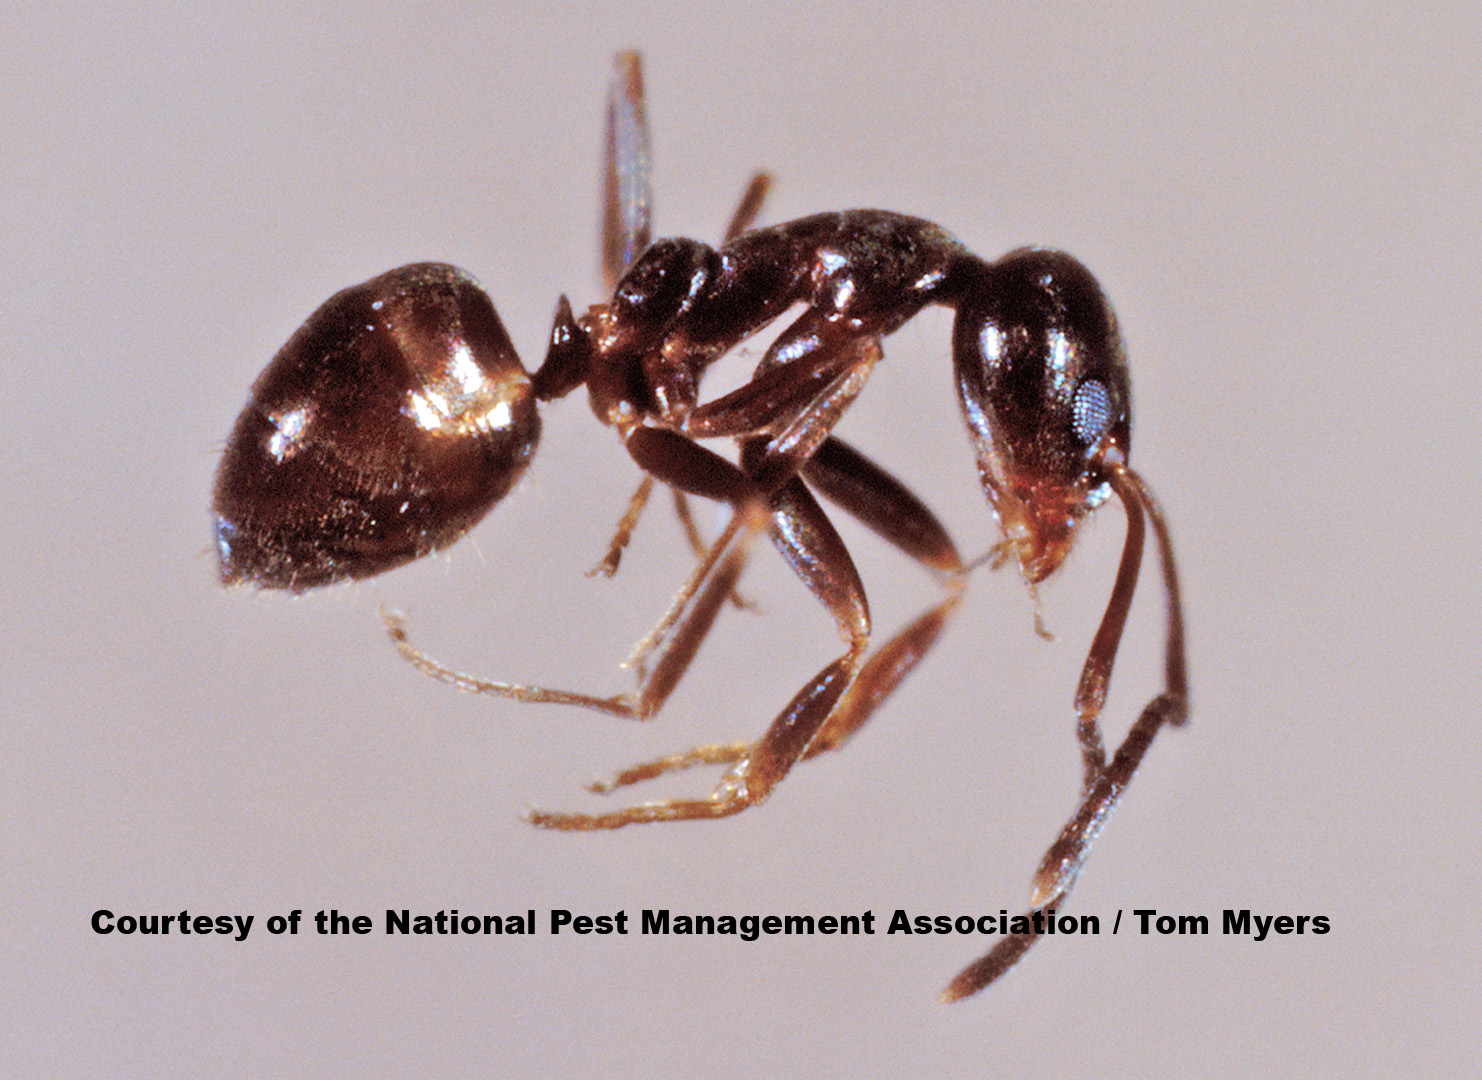 Carpenter Ant Identification Chart